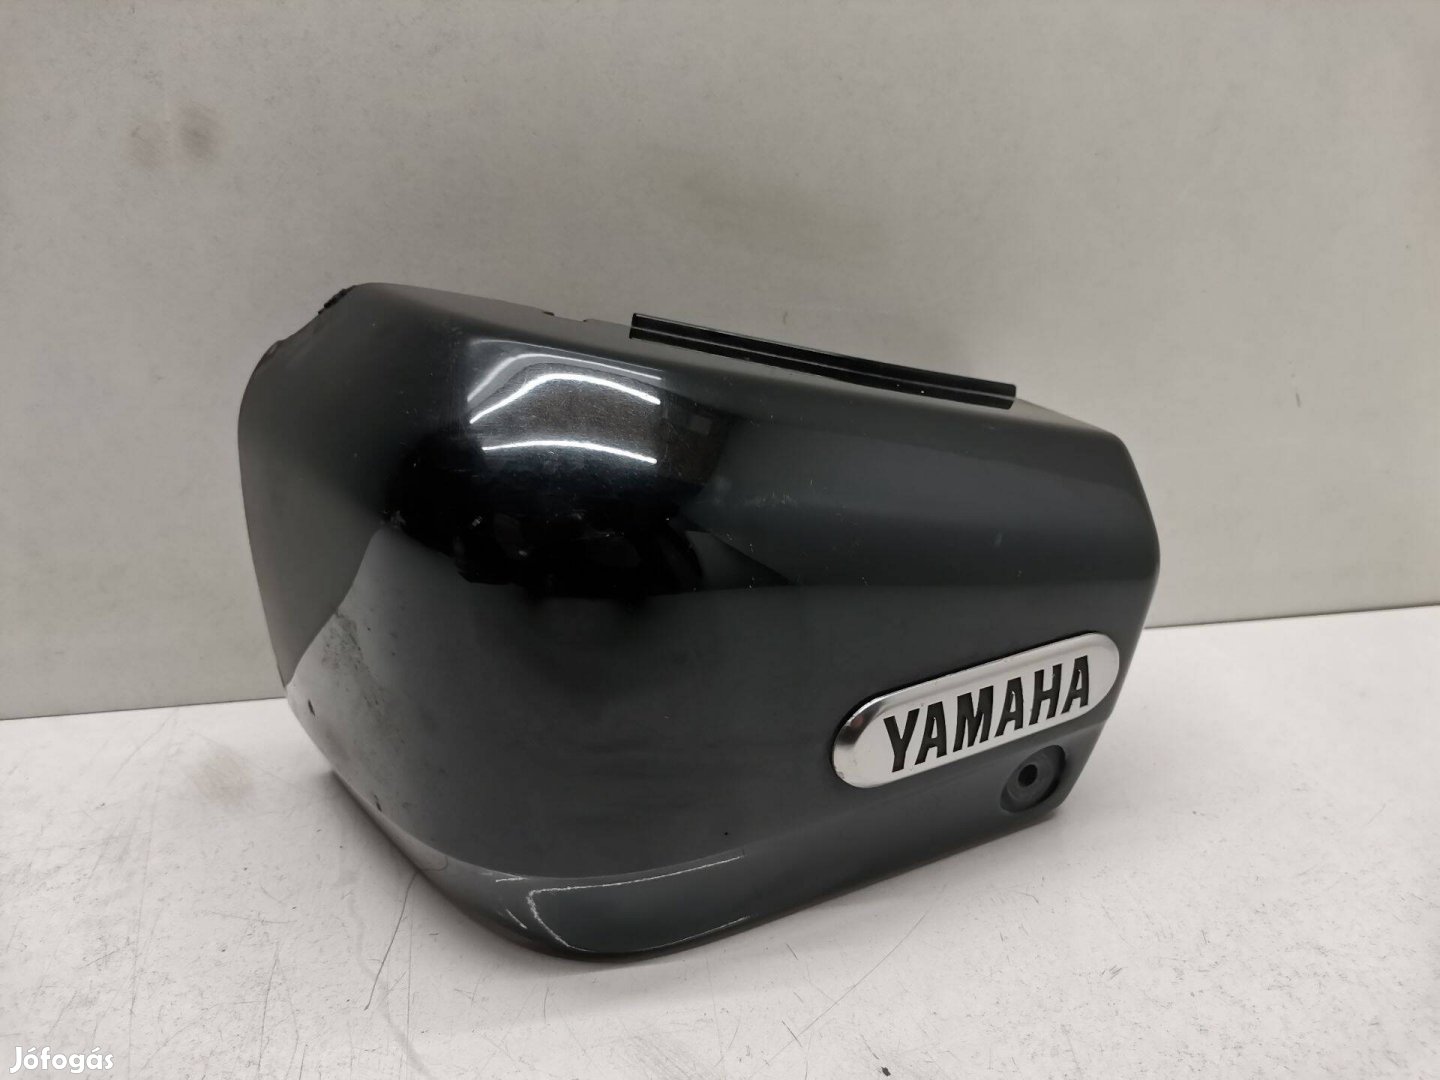 Yamaha Xvs 250 Dragstar (2002) ülés alatti idom (bal)